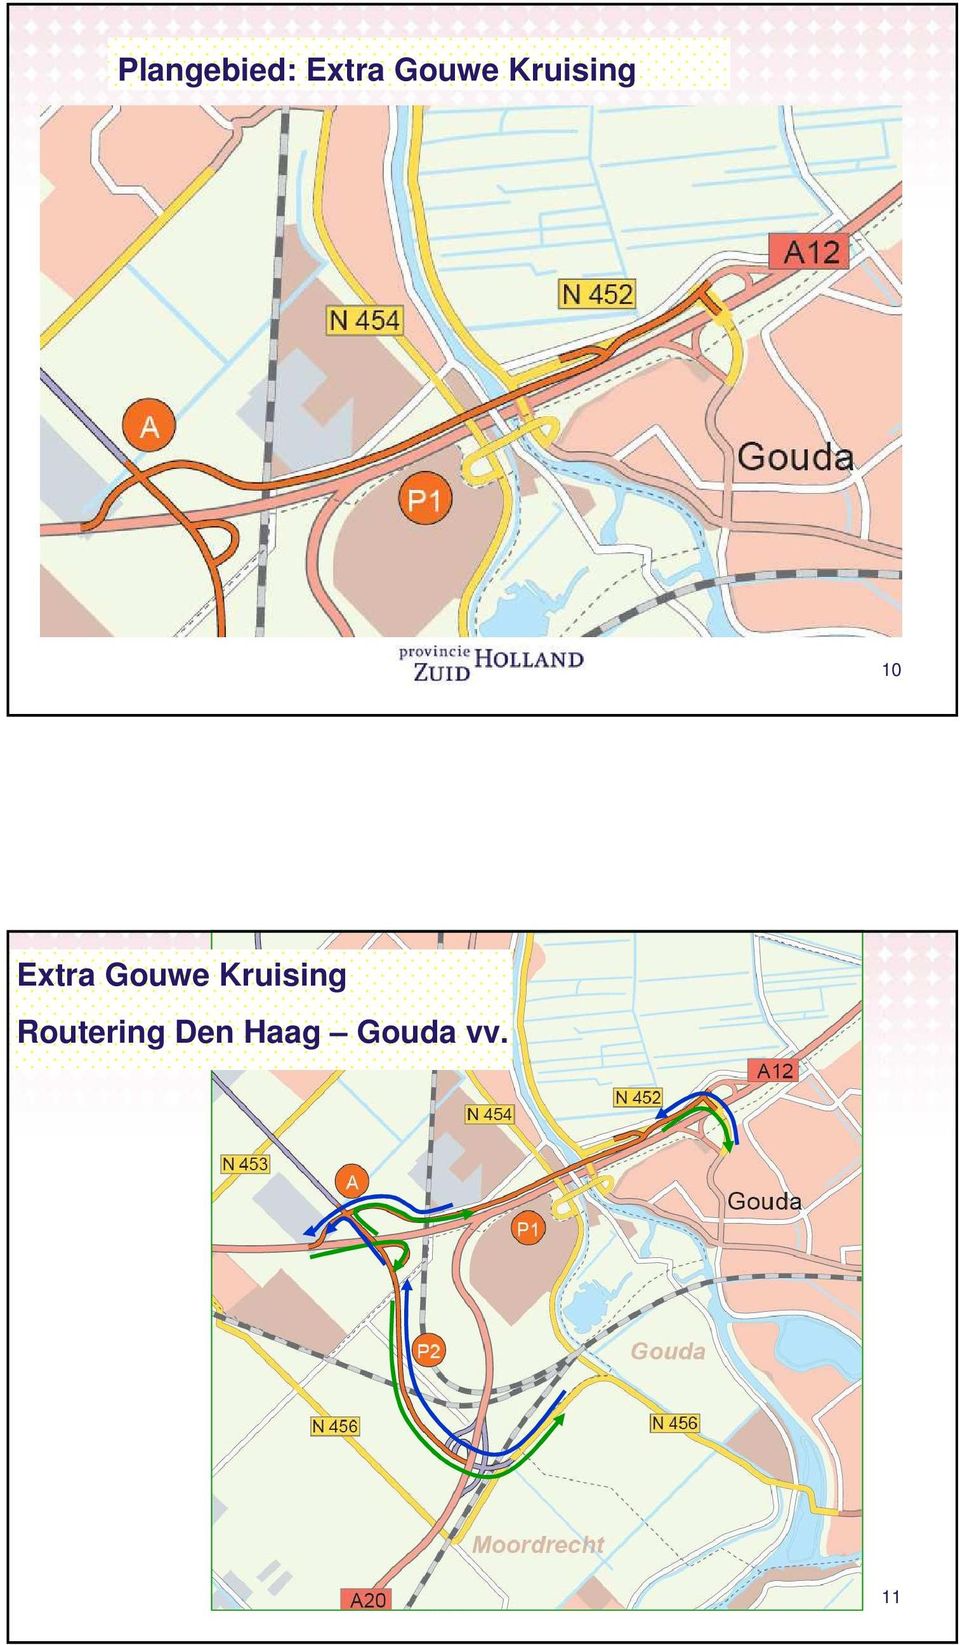 Gouwe Kruising Routering Den Haag Gouda vv.